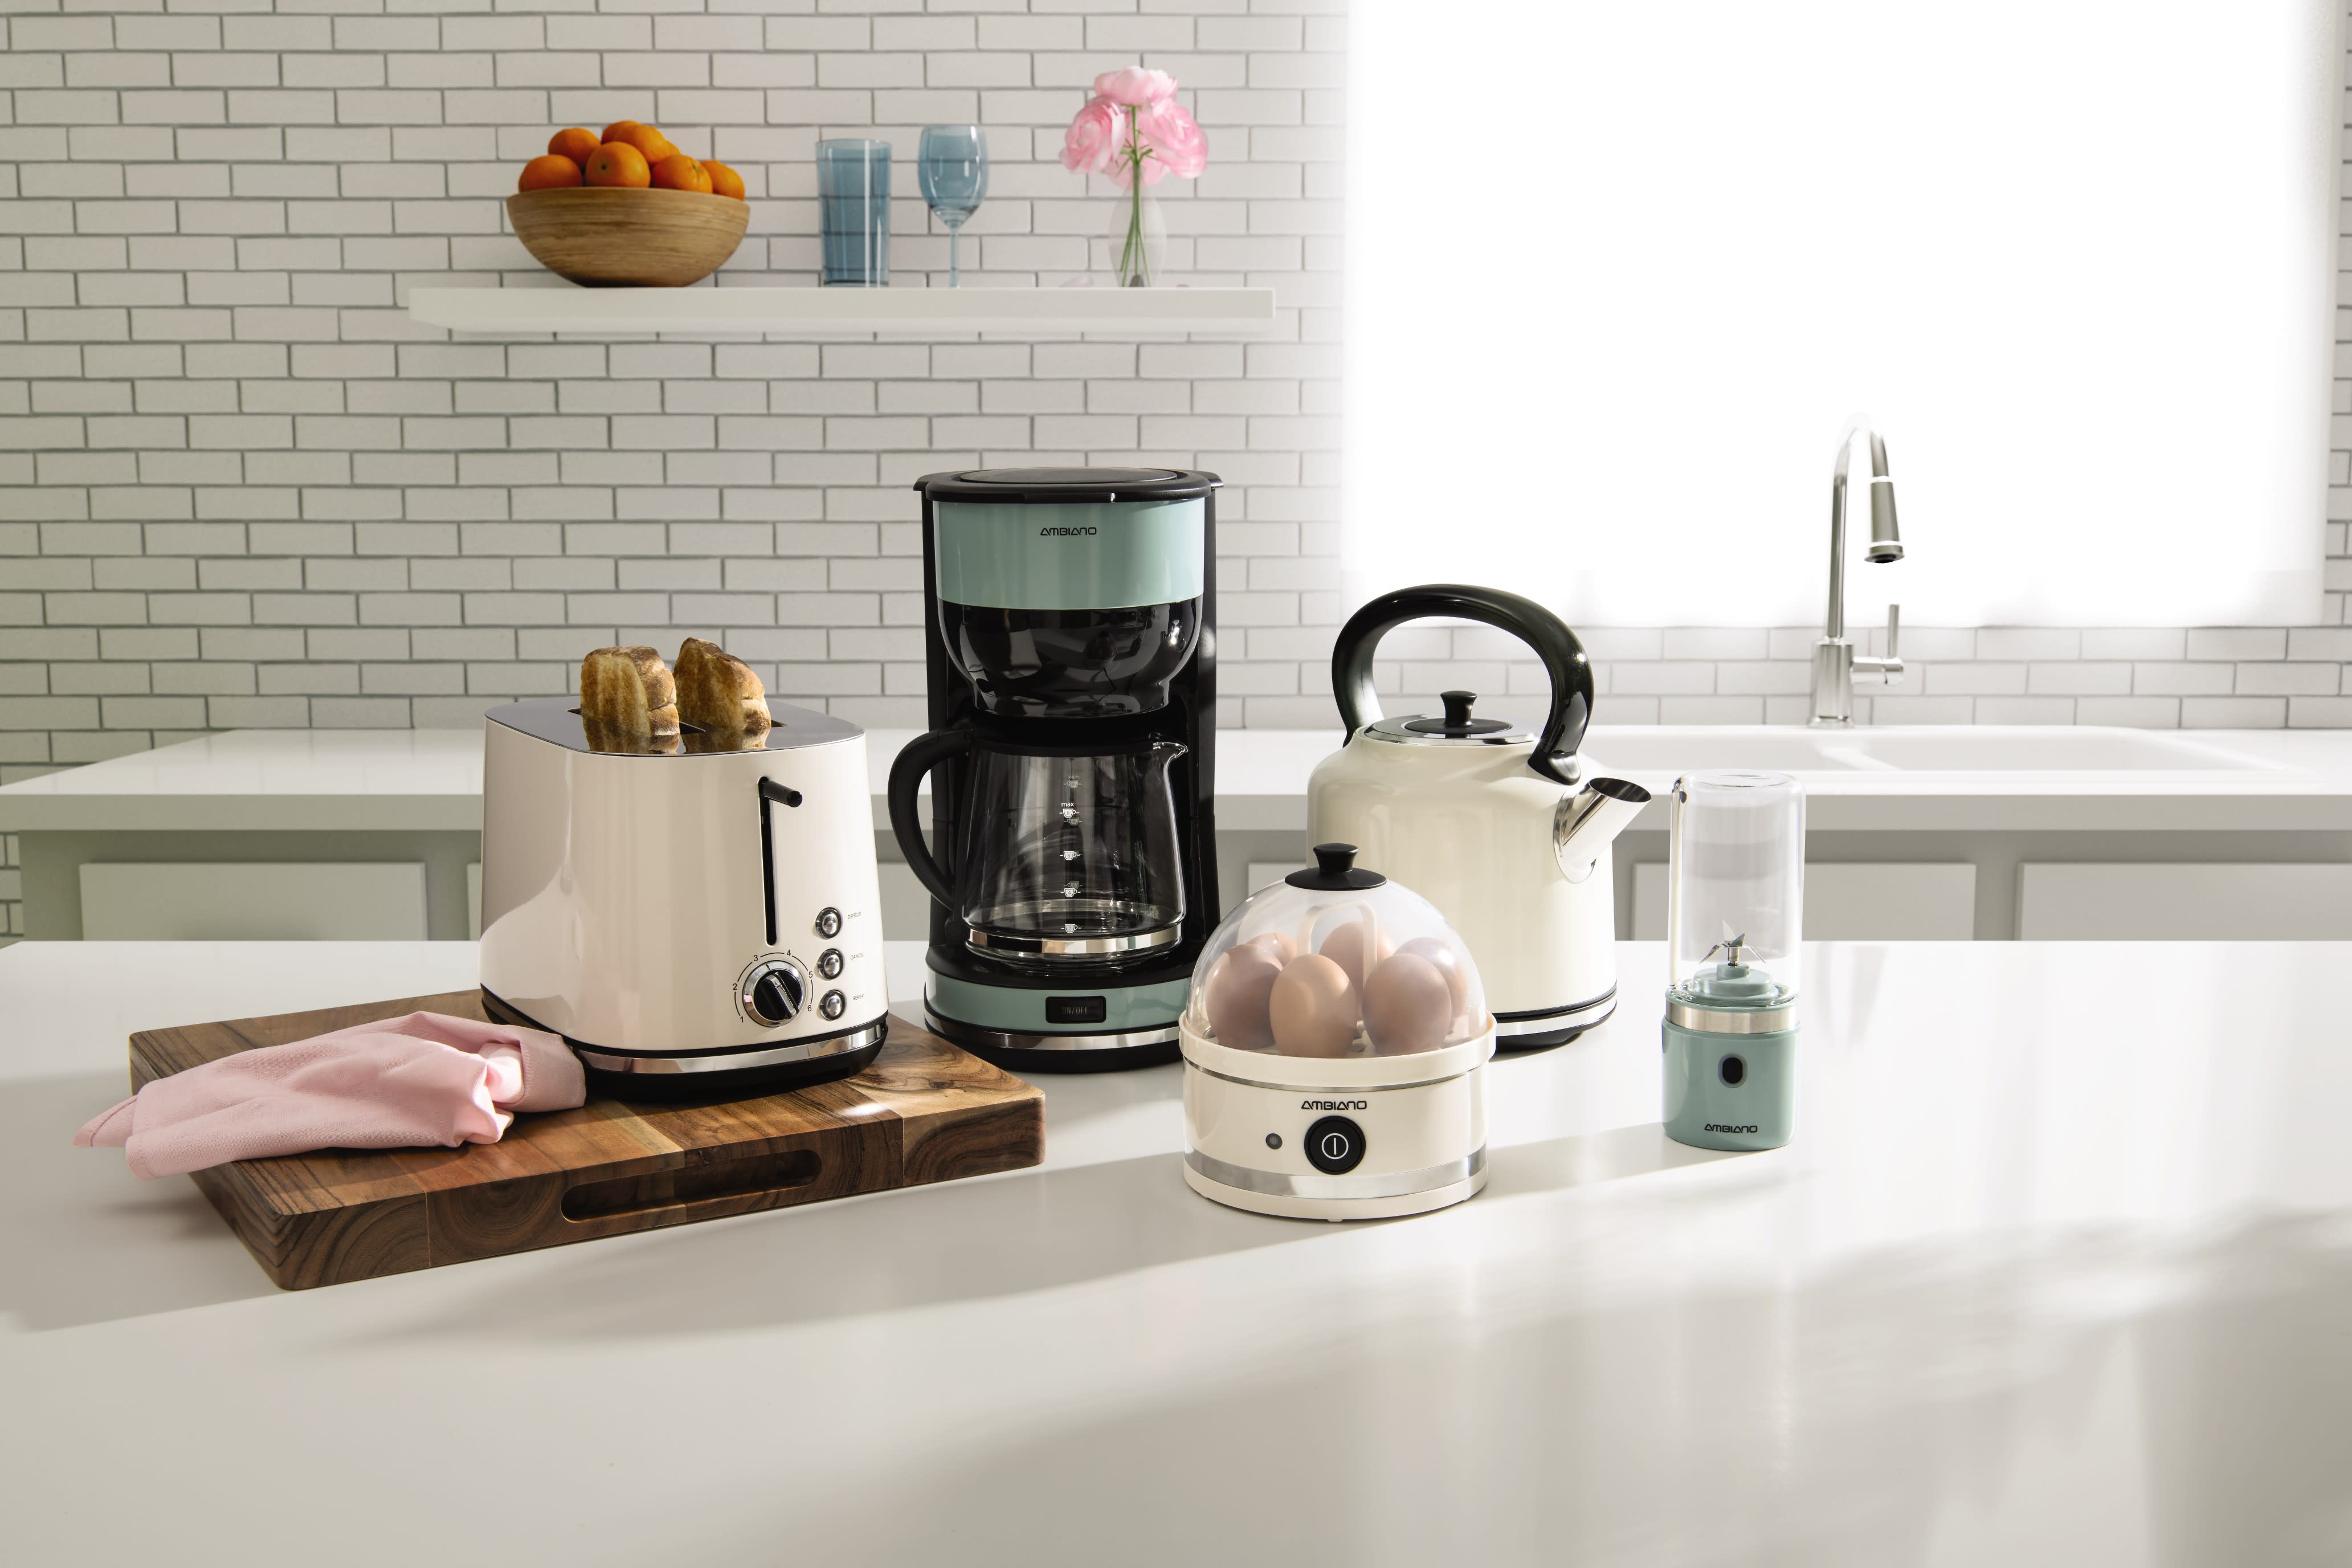 aldi has released a line of retro kitchen appliances | apartment